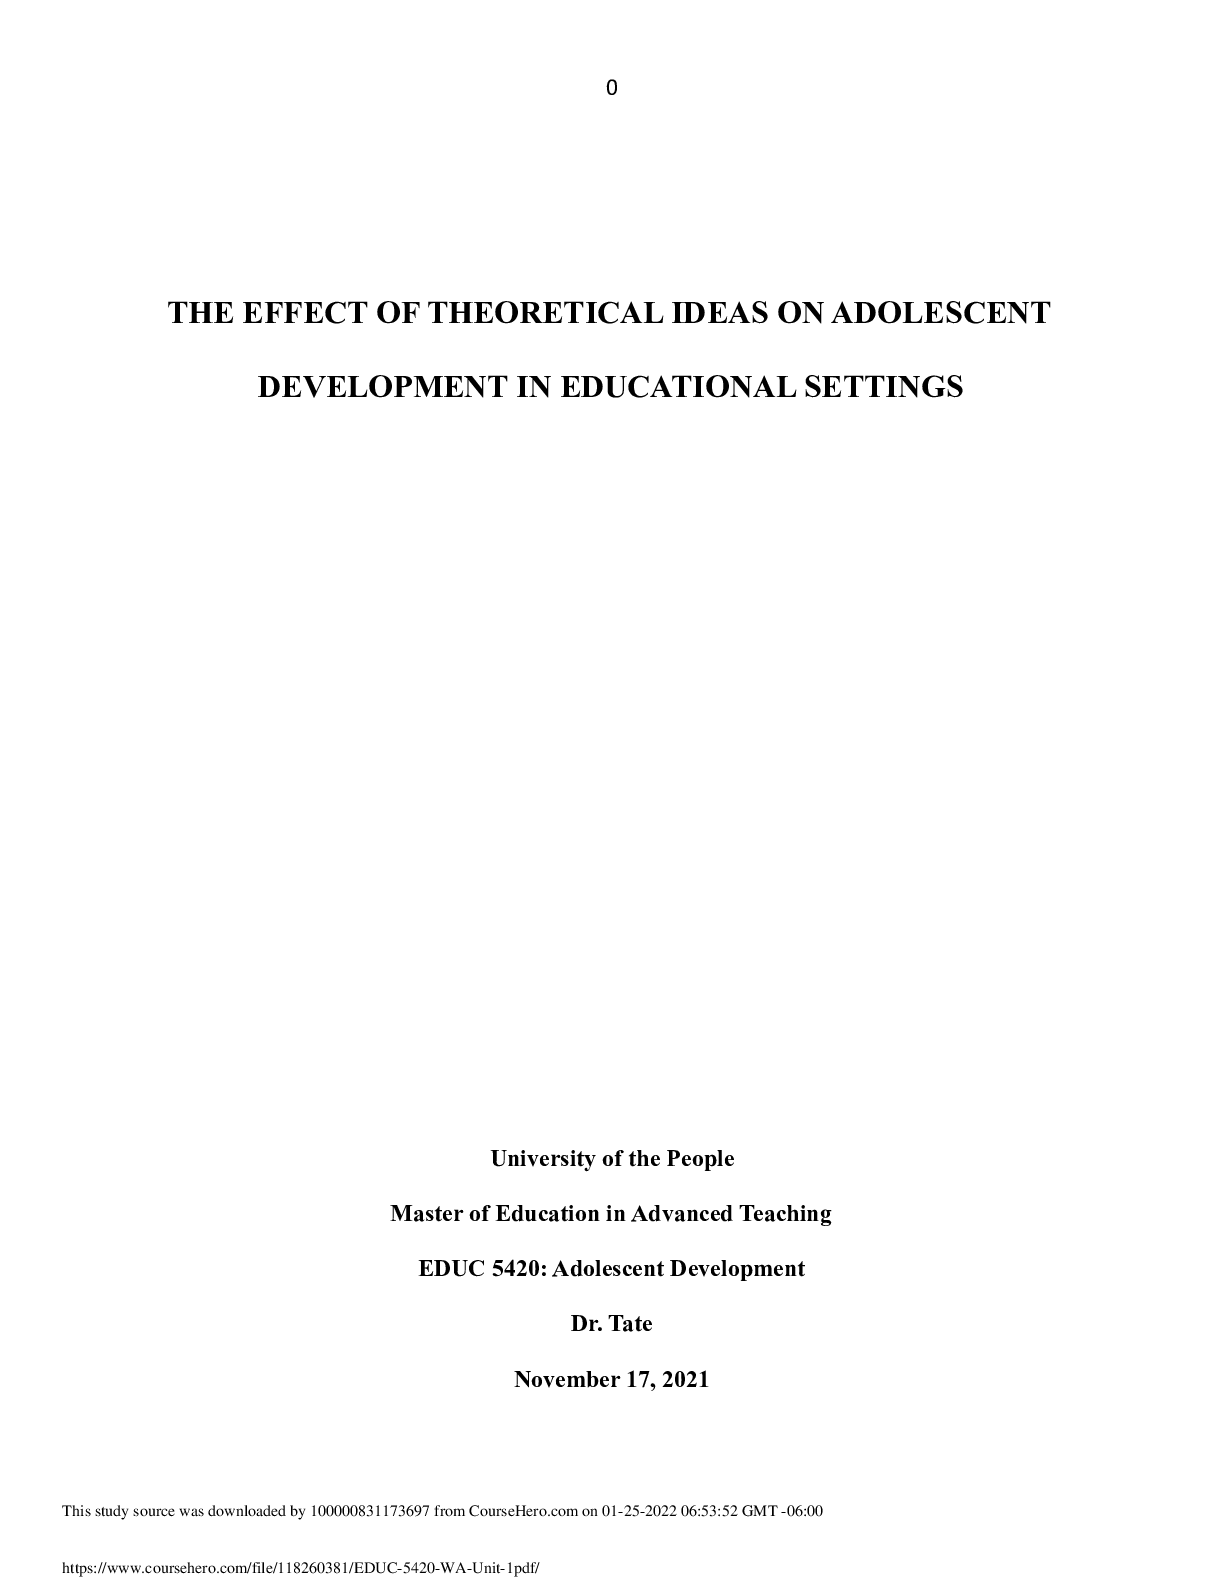 EDUC 5420: Adolescent Development in Education